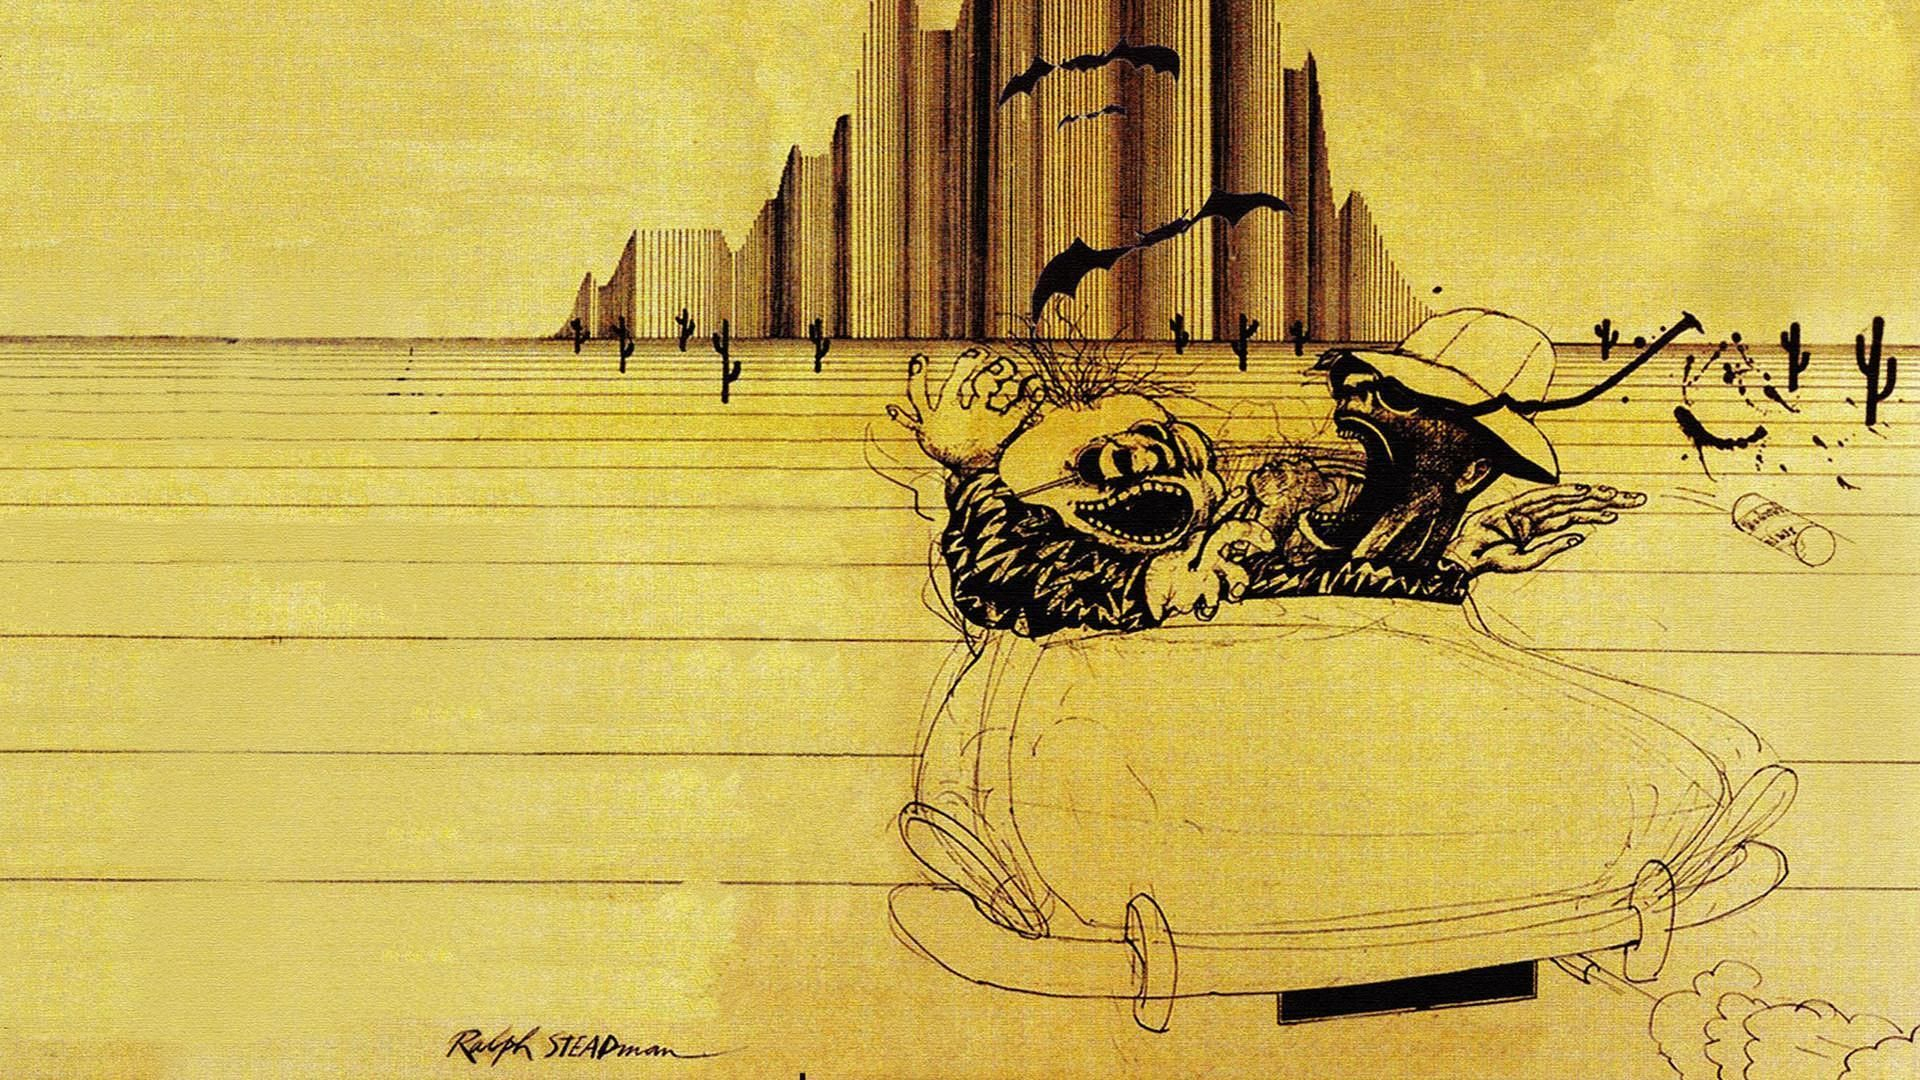 1920x1080 Fear and Loathing in Las Vegas Wallpaper: Ralph Steadman illustration | Ralph steadman art, Ralph steadman, Fear and loathing